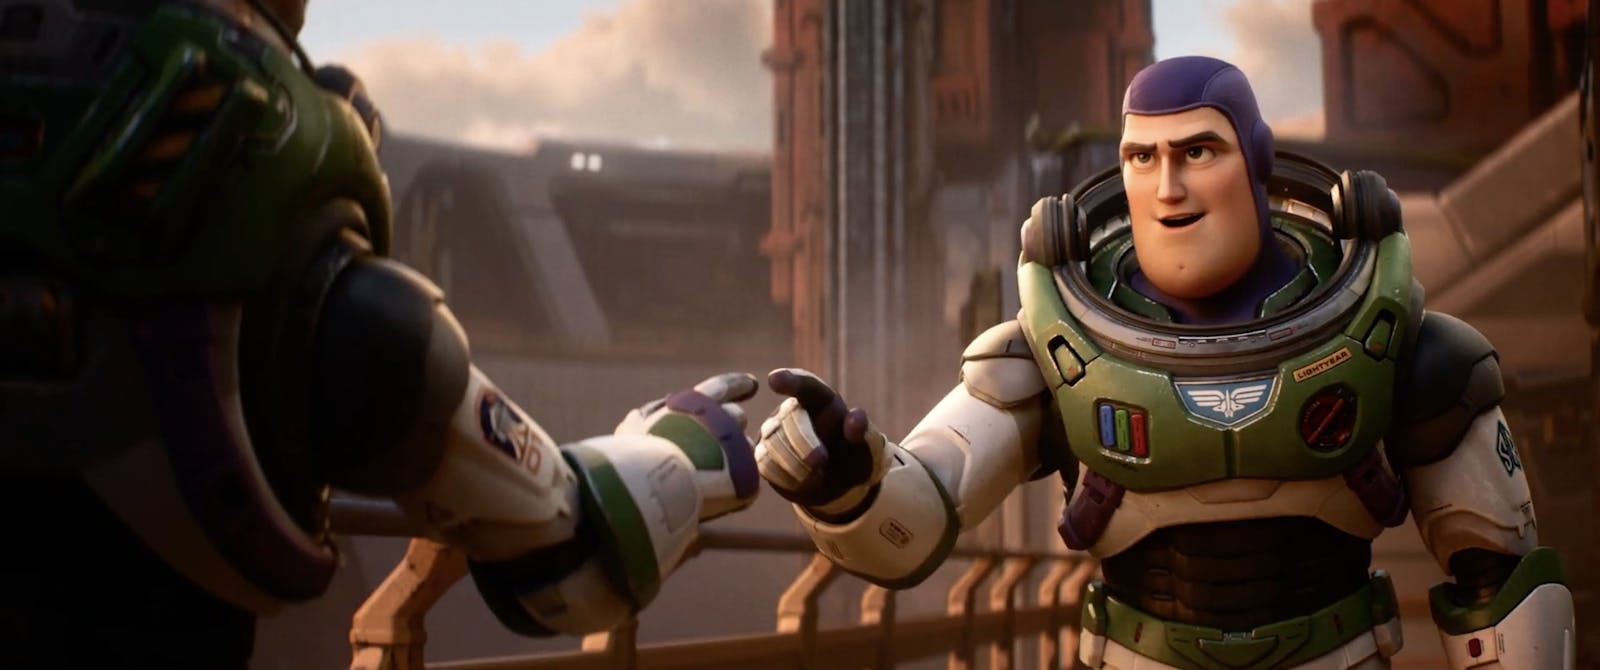 TRAILER: Chris Evans är Buzz i Pixars Lightyear